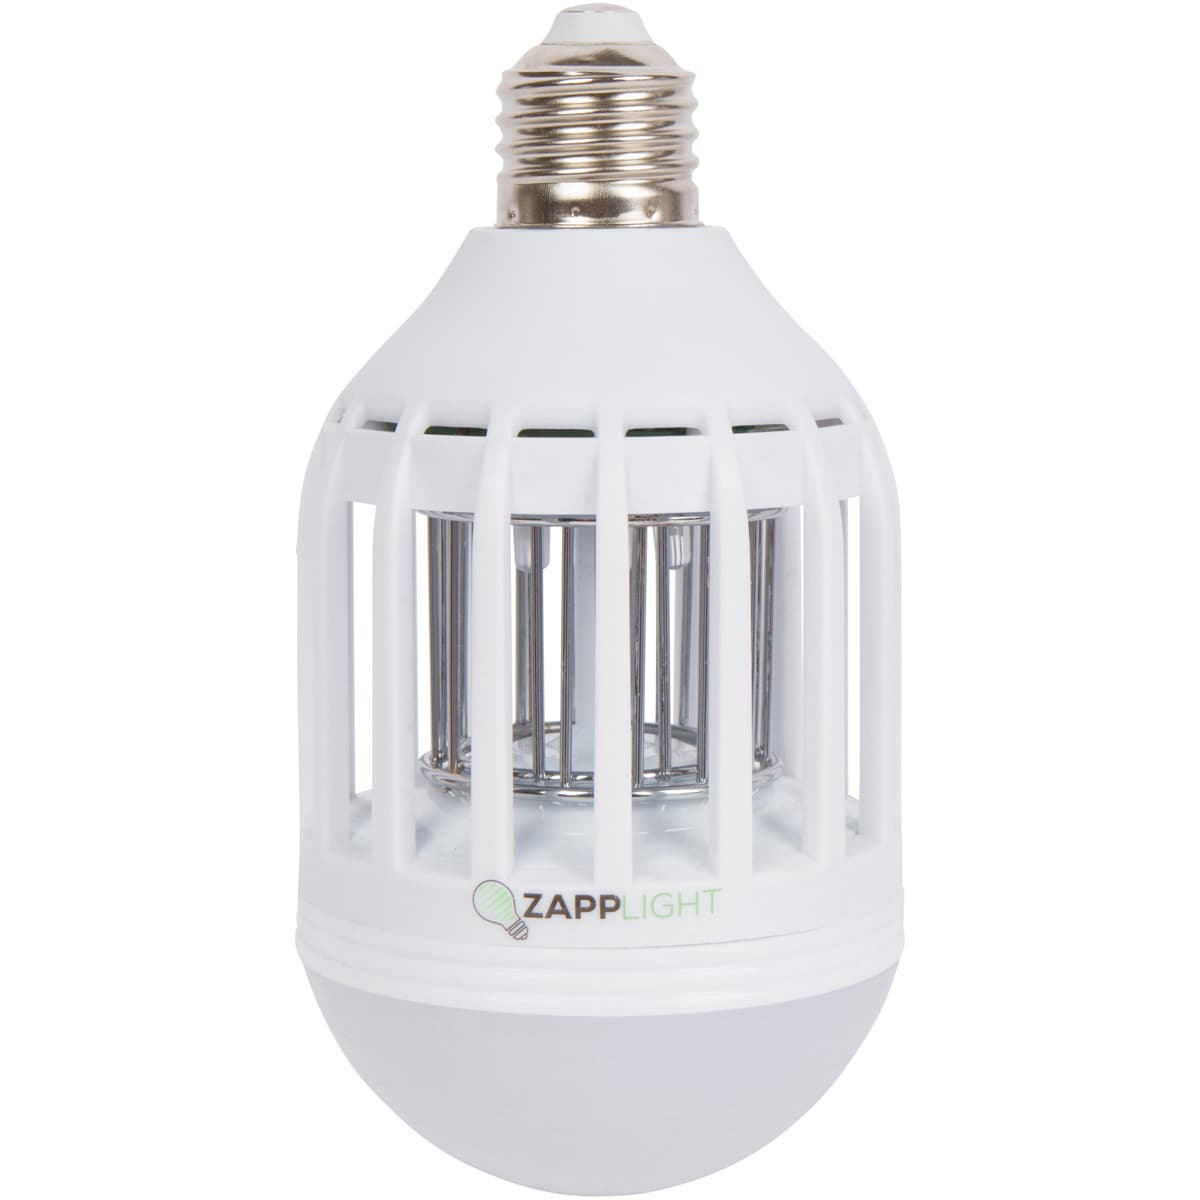 Zapplight 2in1 LED Bulb_Bulbs_Zapper_Mosquito_Bug Killer